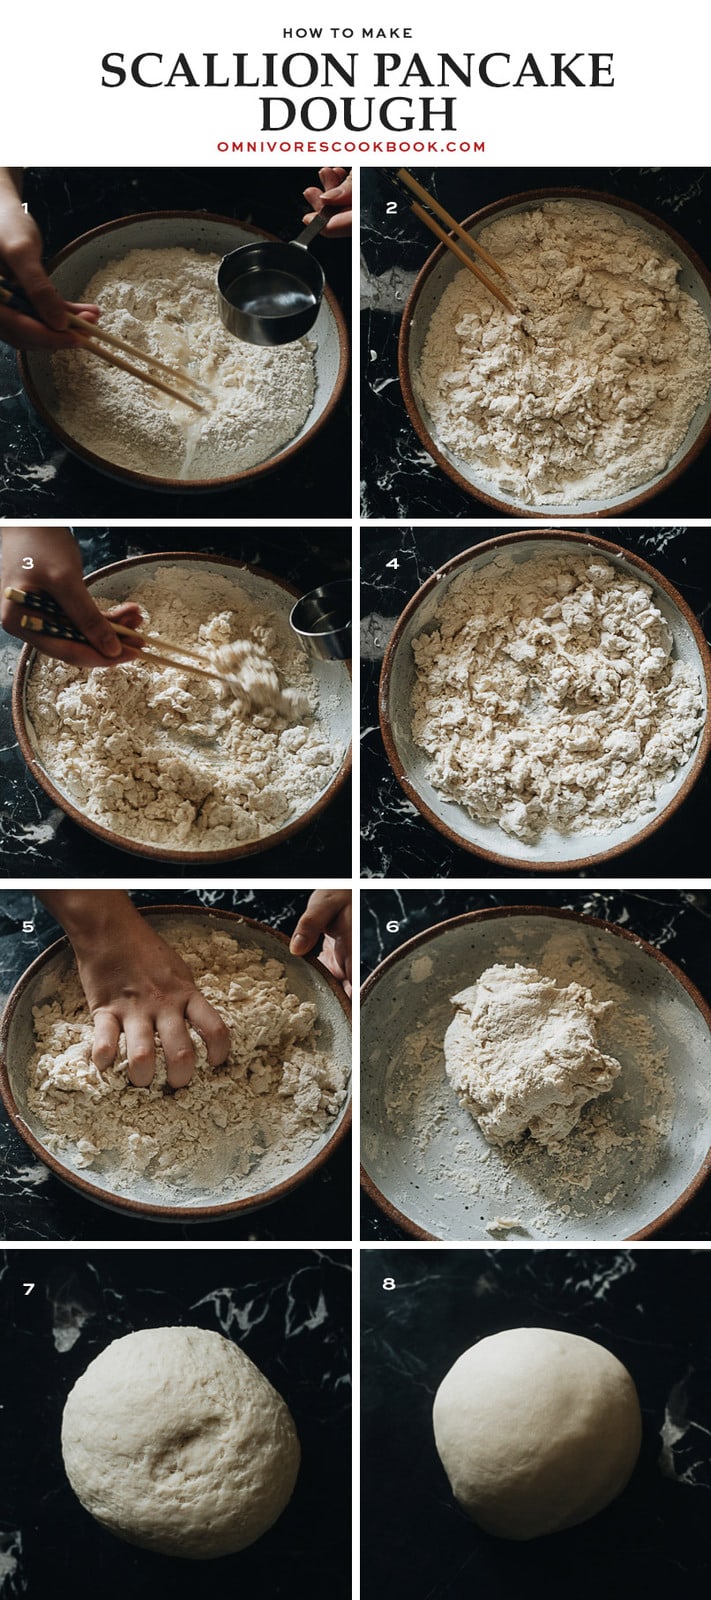 Making scallion pancake dough step-by-step